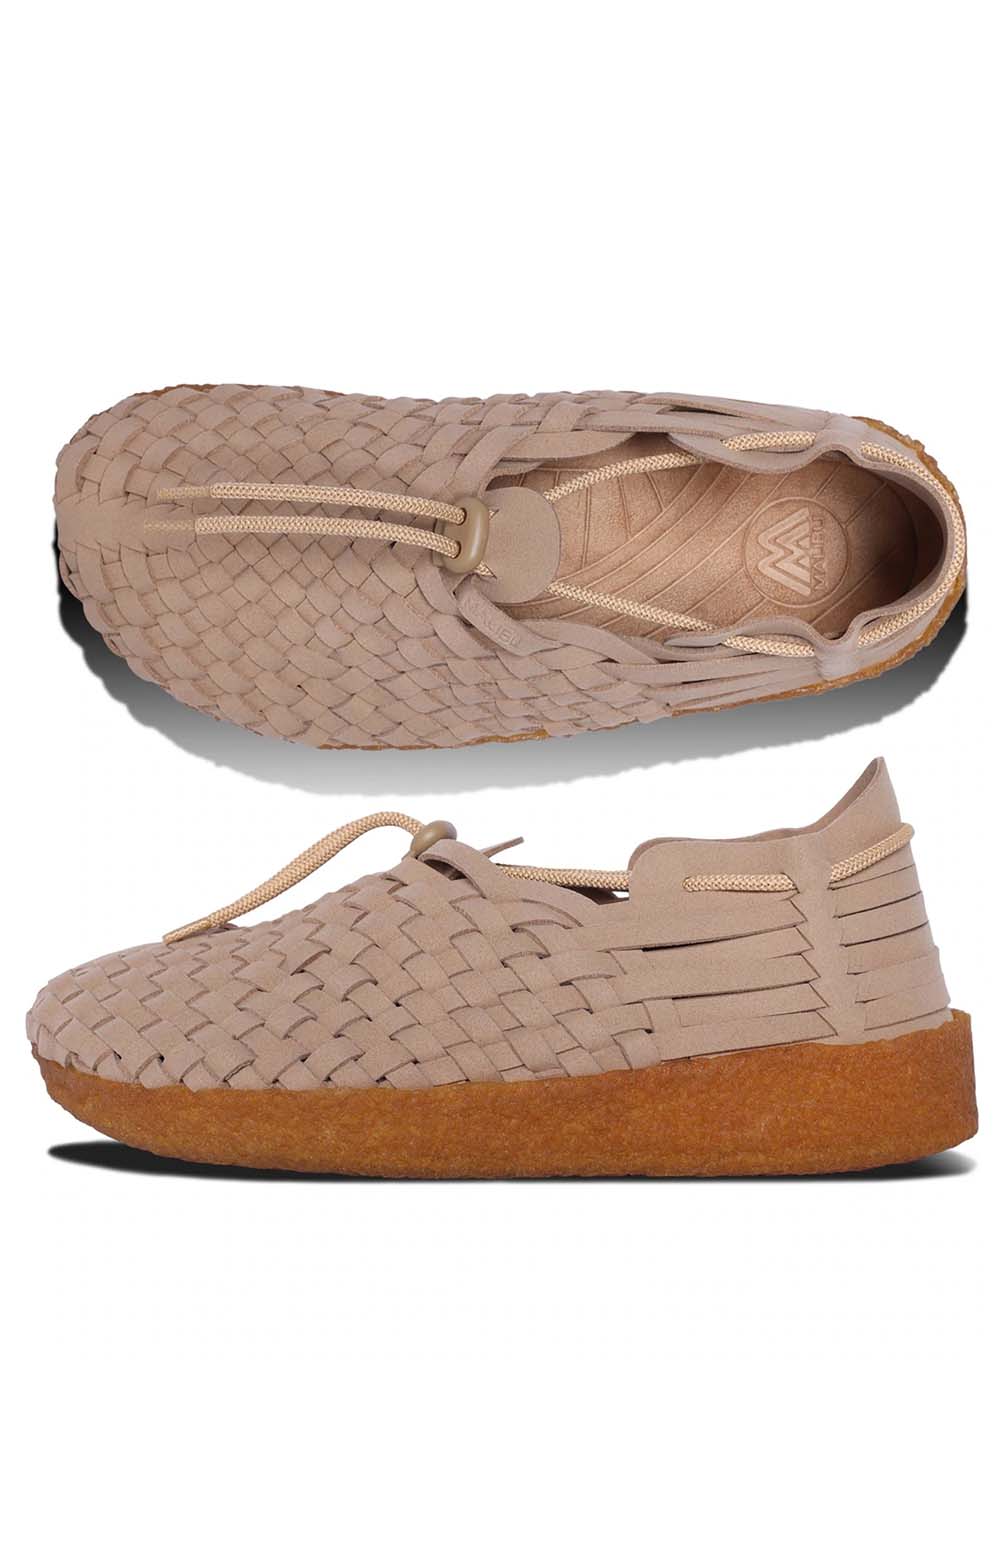 Malibu Sandals Women's, Latigo Suede Vegan Leather Shoes - Beige